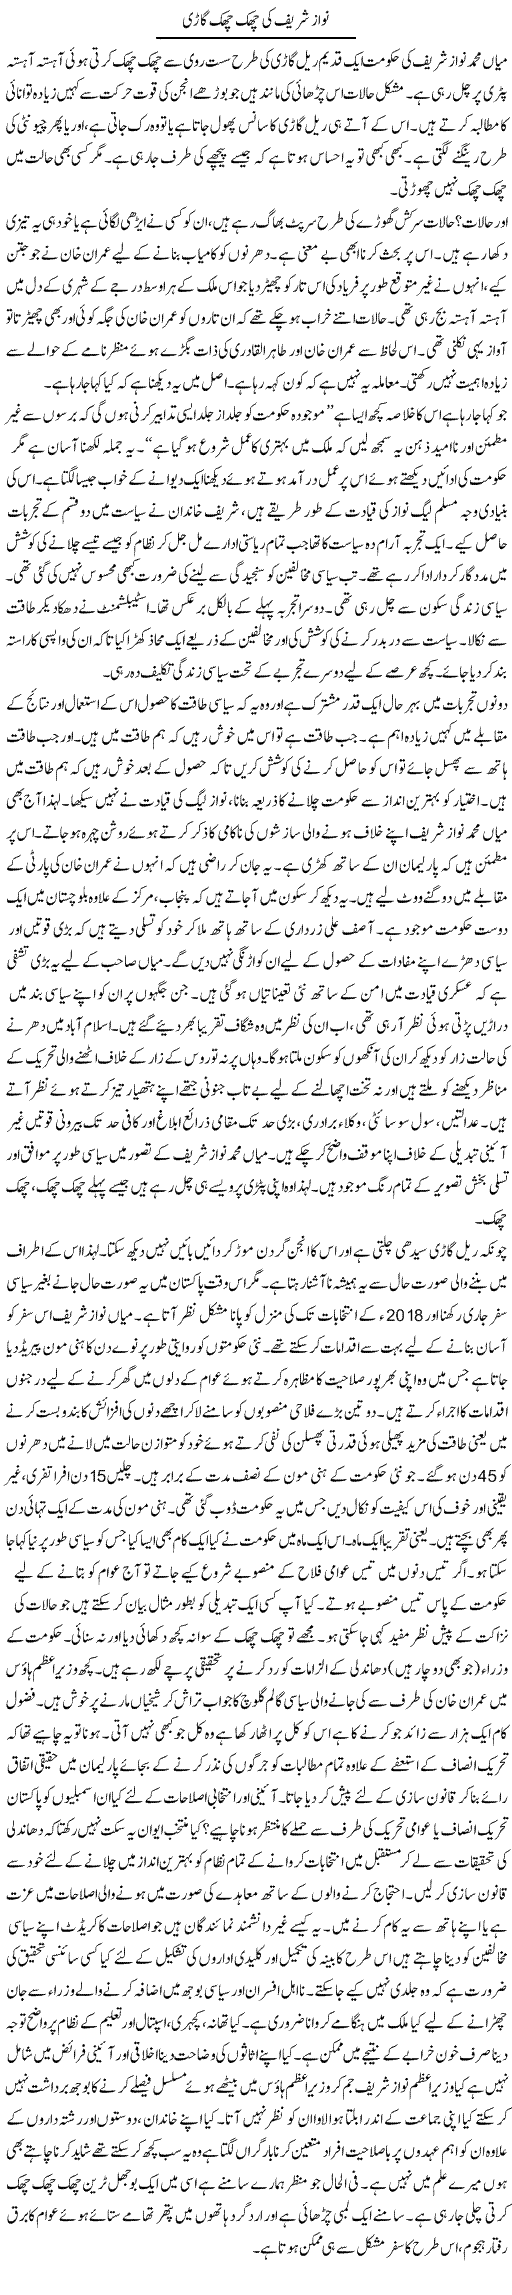 Nawaz Sharif Ki Chak Chak Gari | Talat Hussain | Daily Urdu Columns